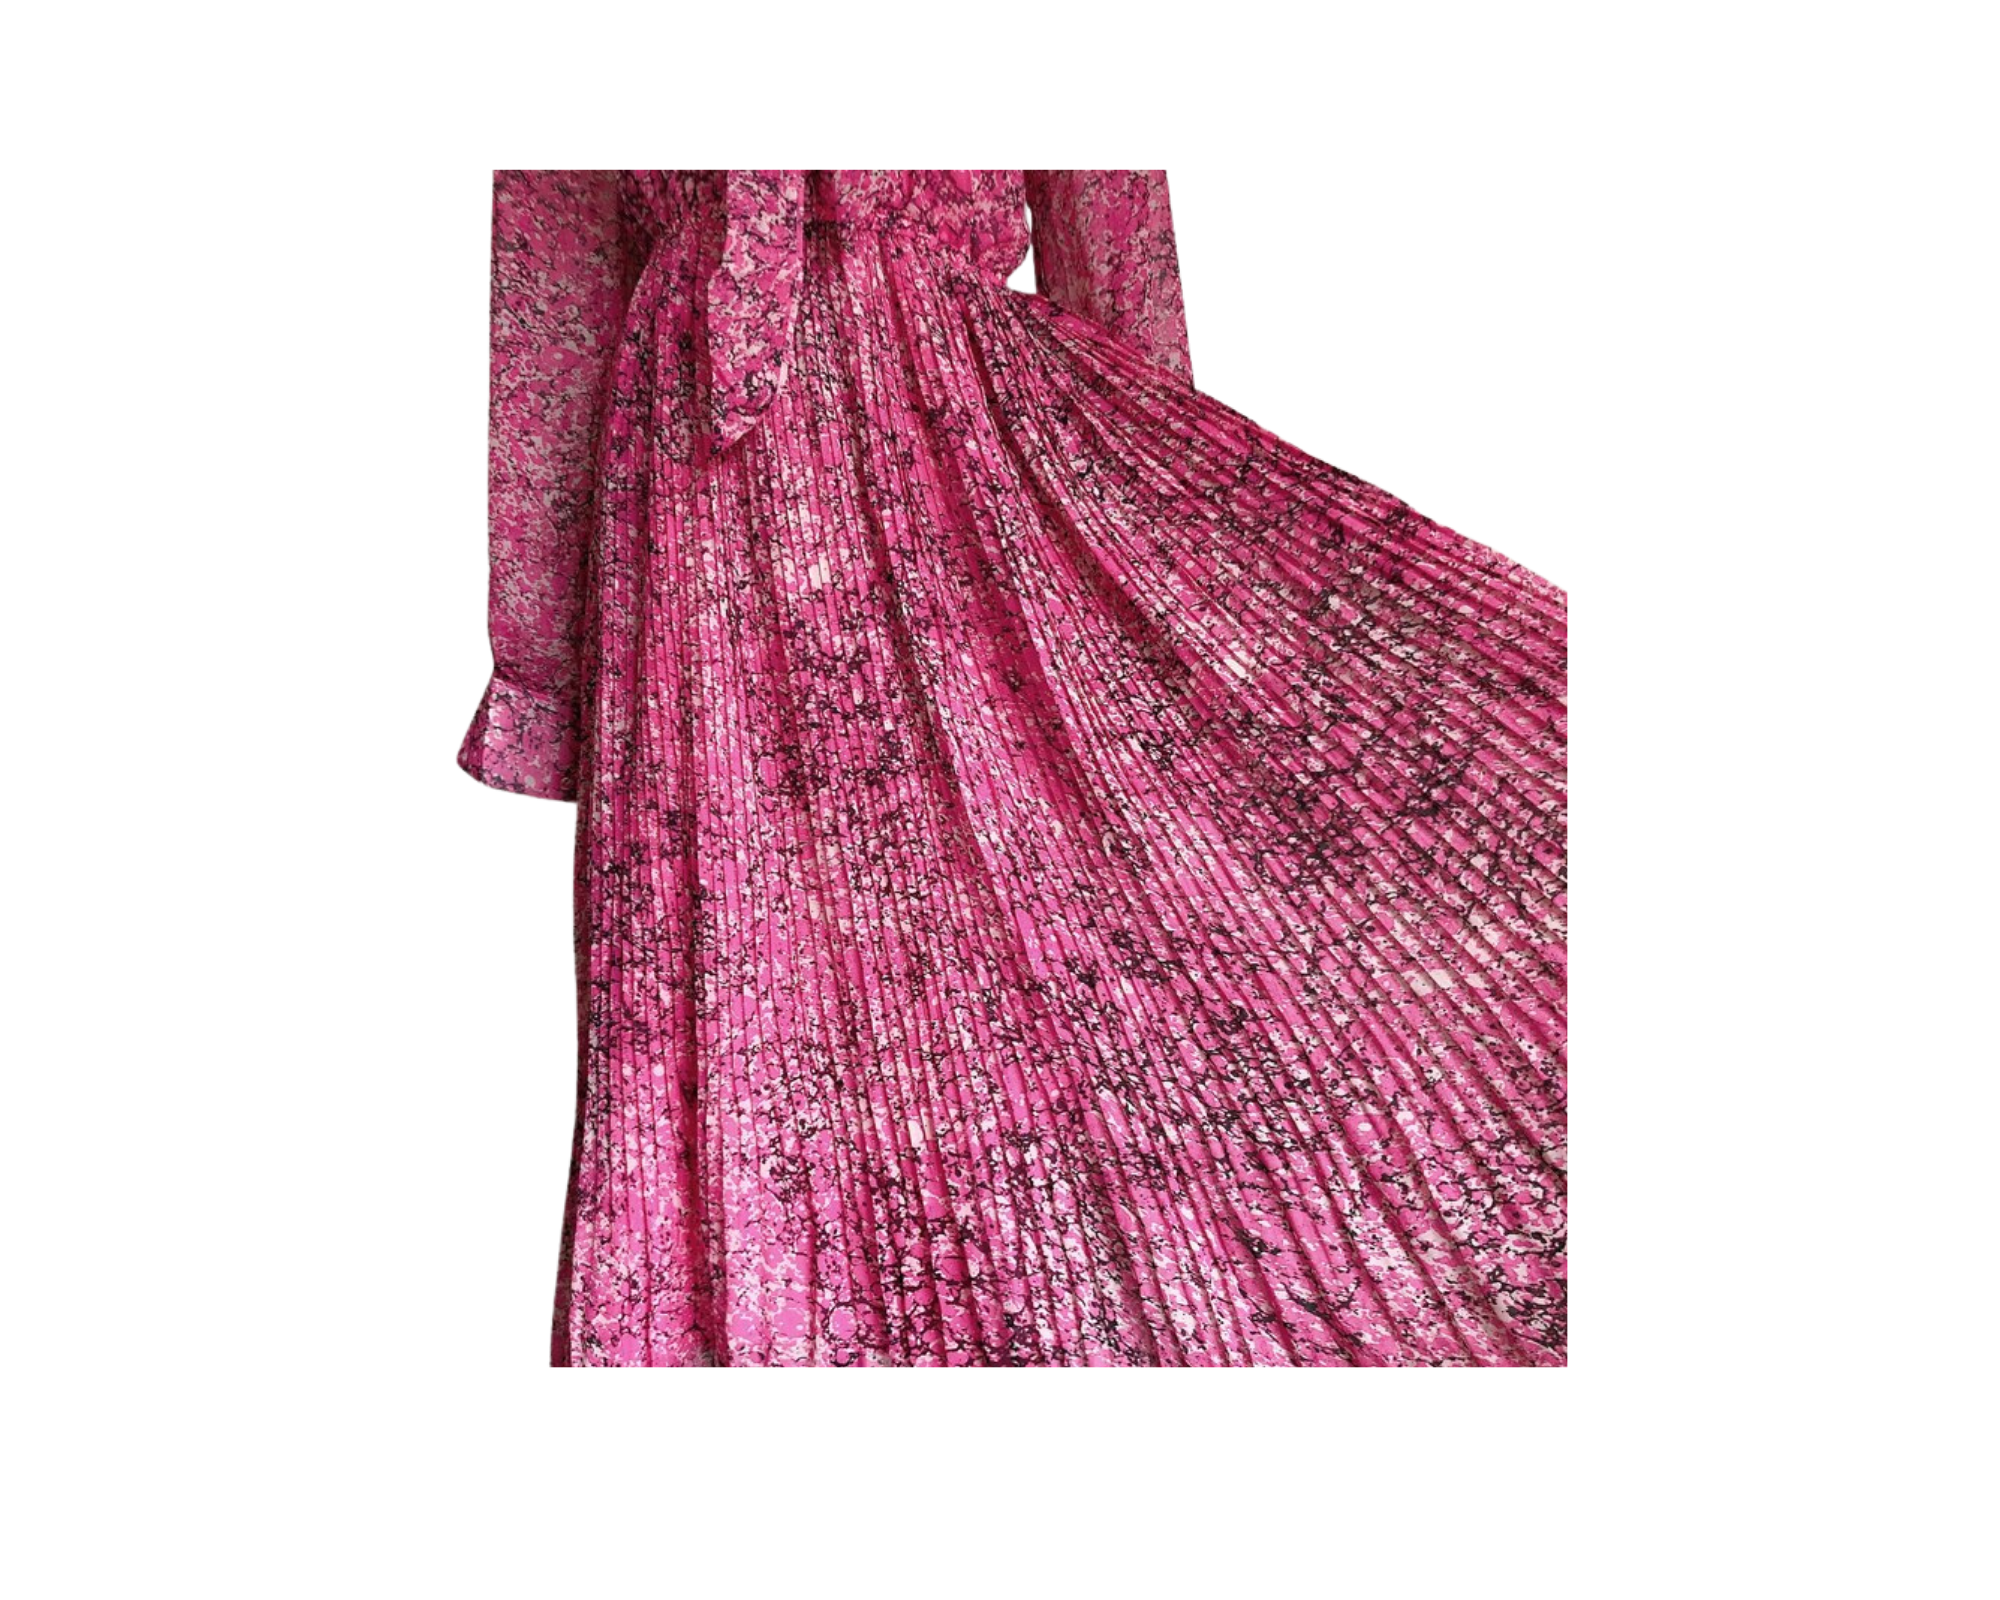 Pleated Dream Pink Dress